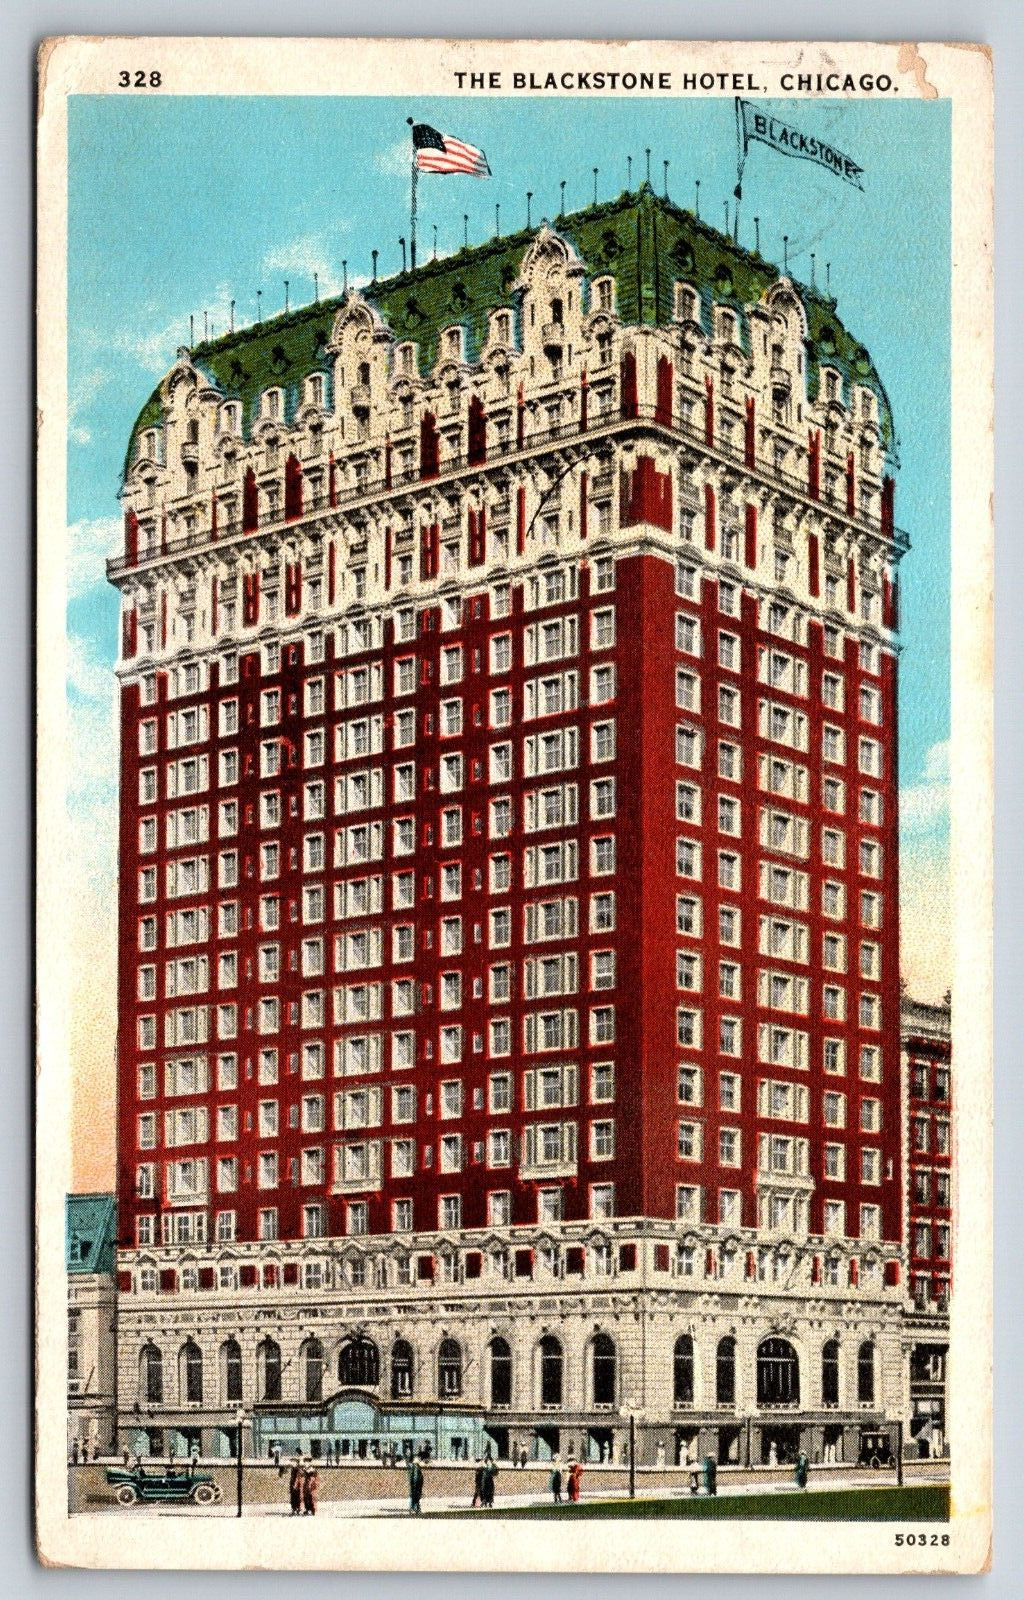 The Blackstone Hotel, Chicago, Illinois Vintage Postcard